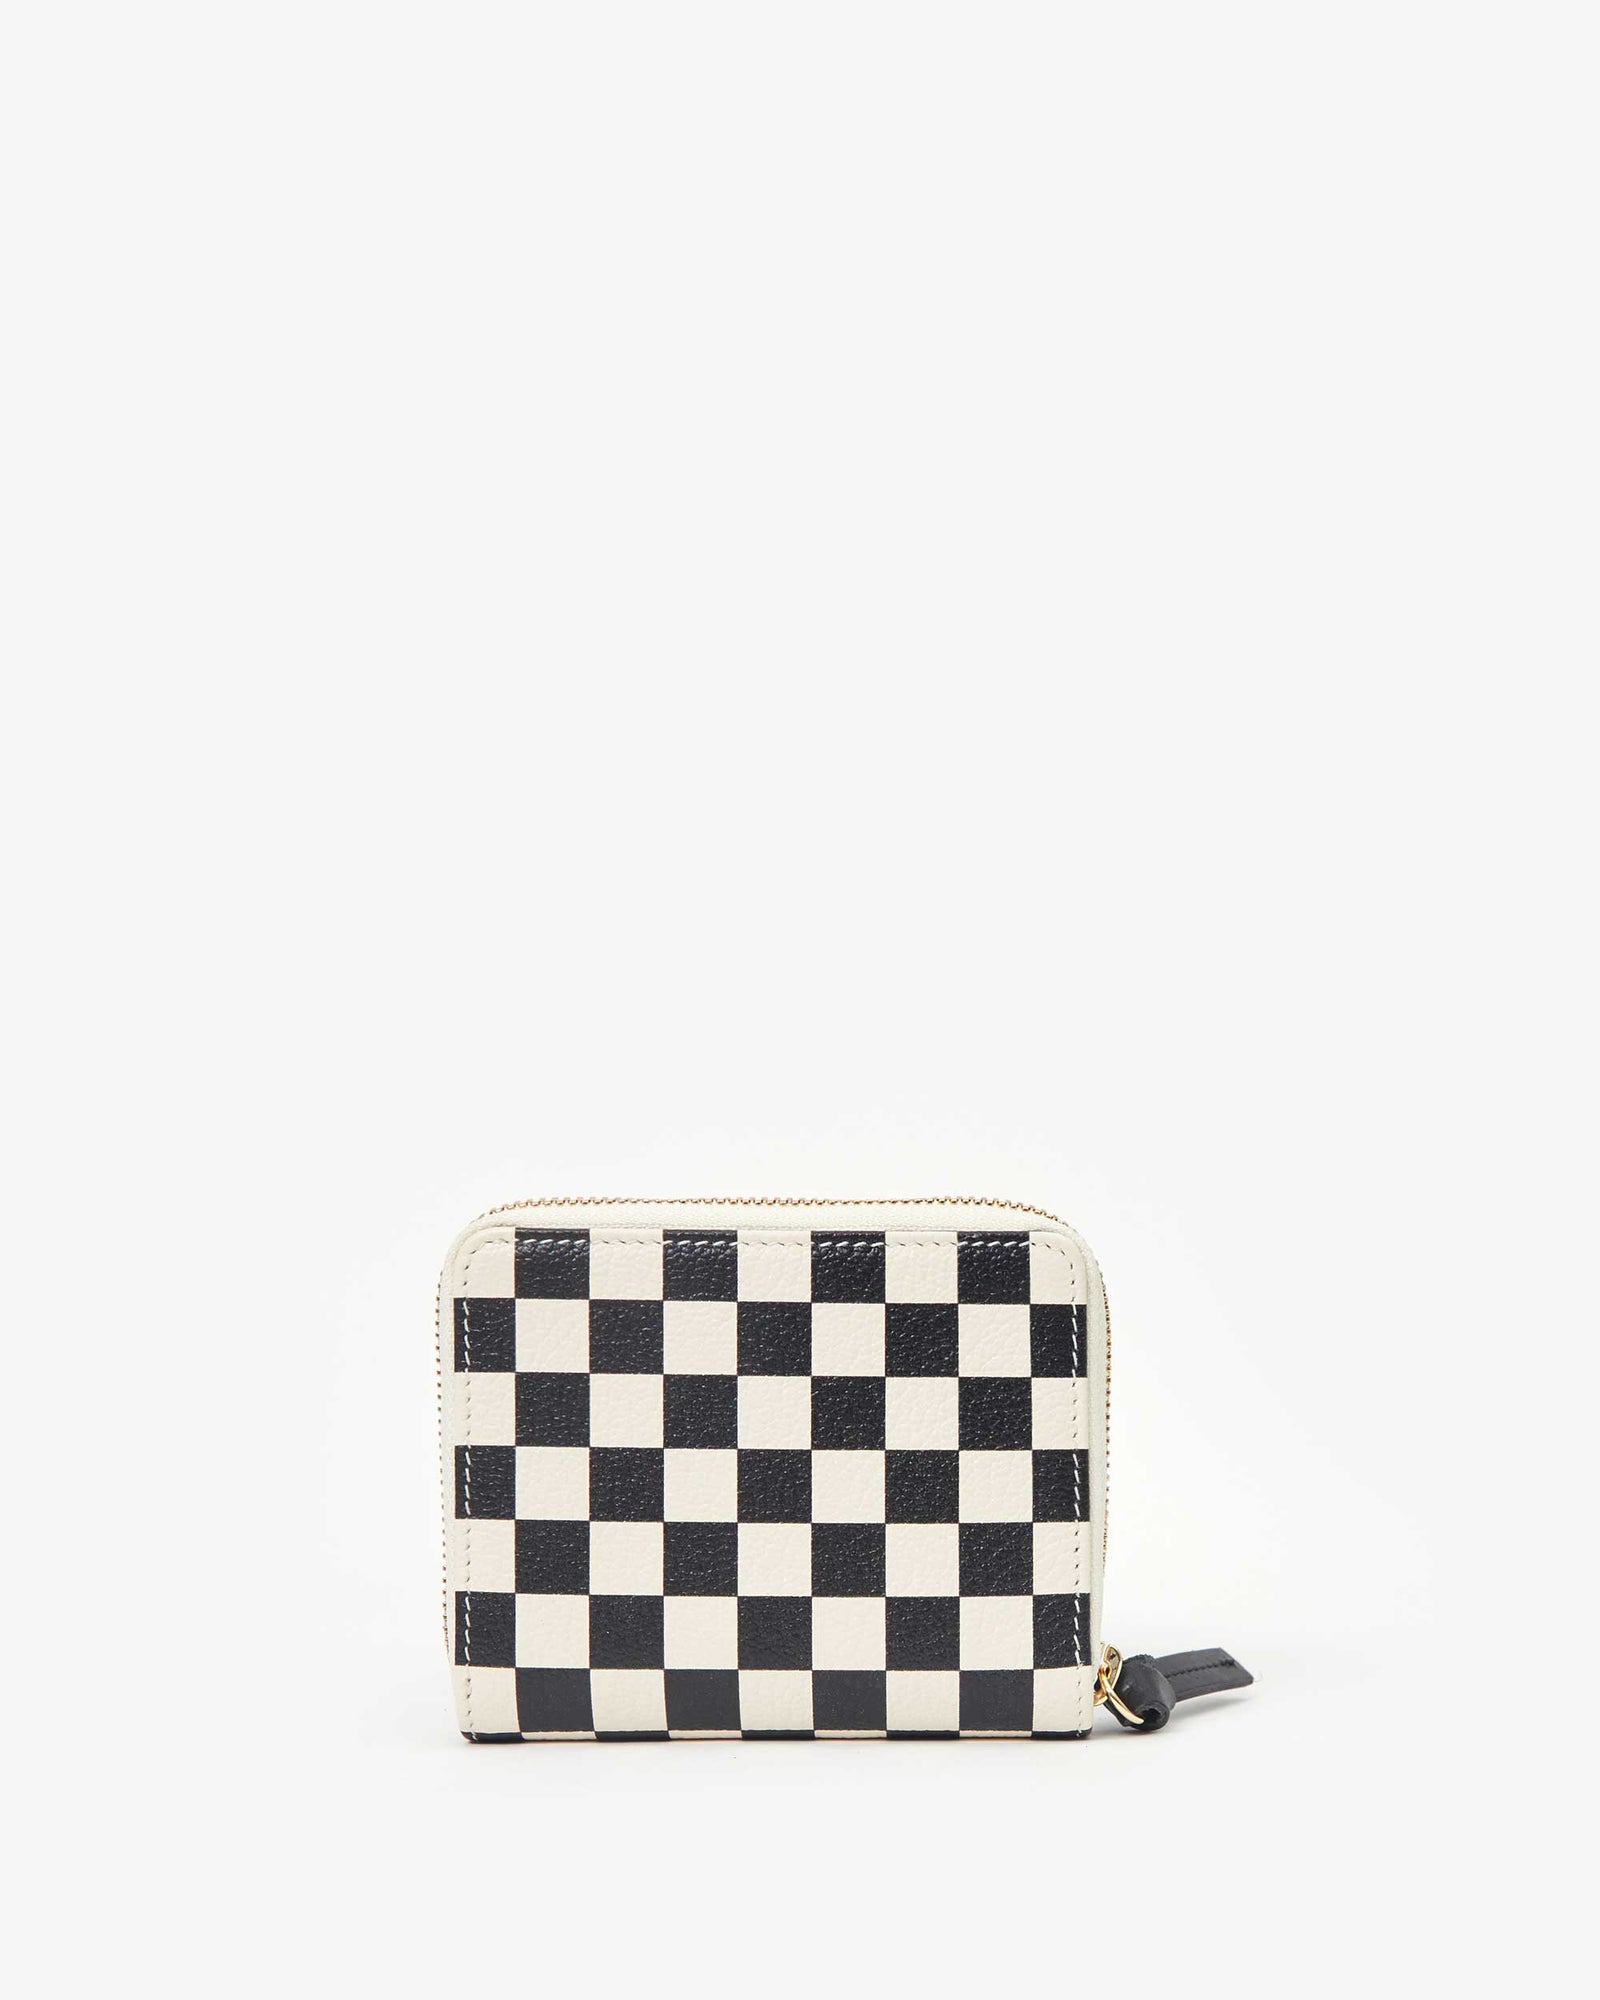 Clare V. Petit Zip Wallet Black & Cream Checkers